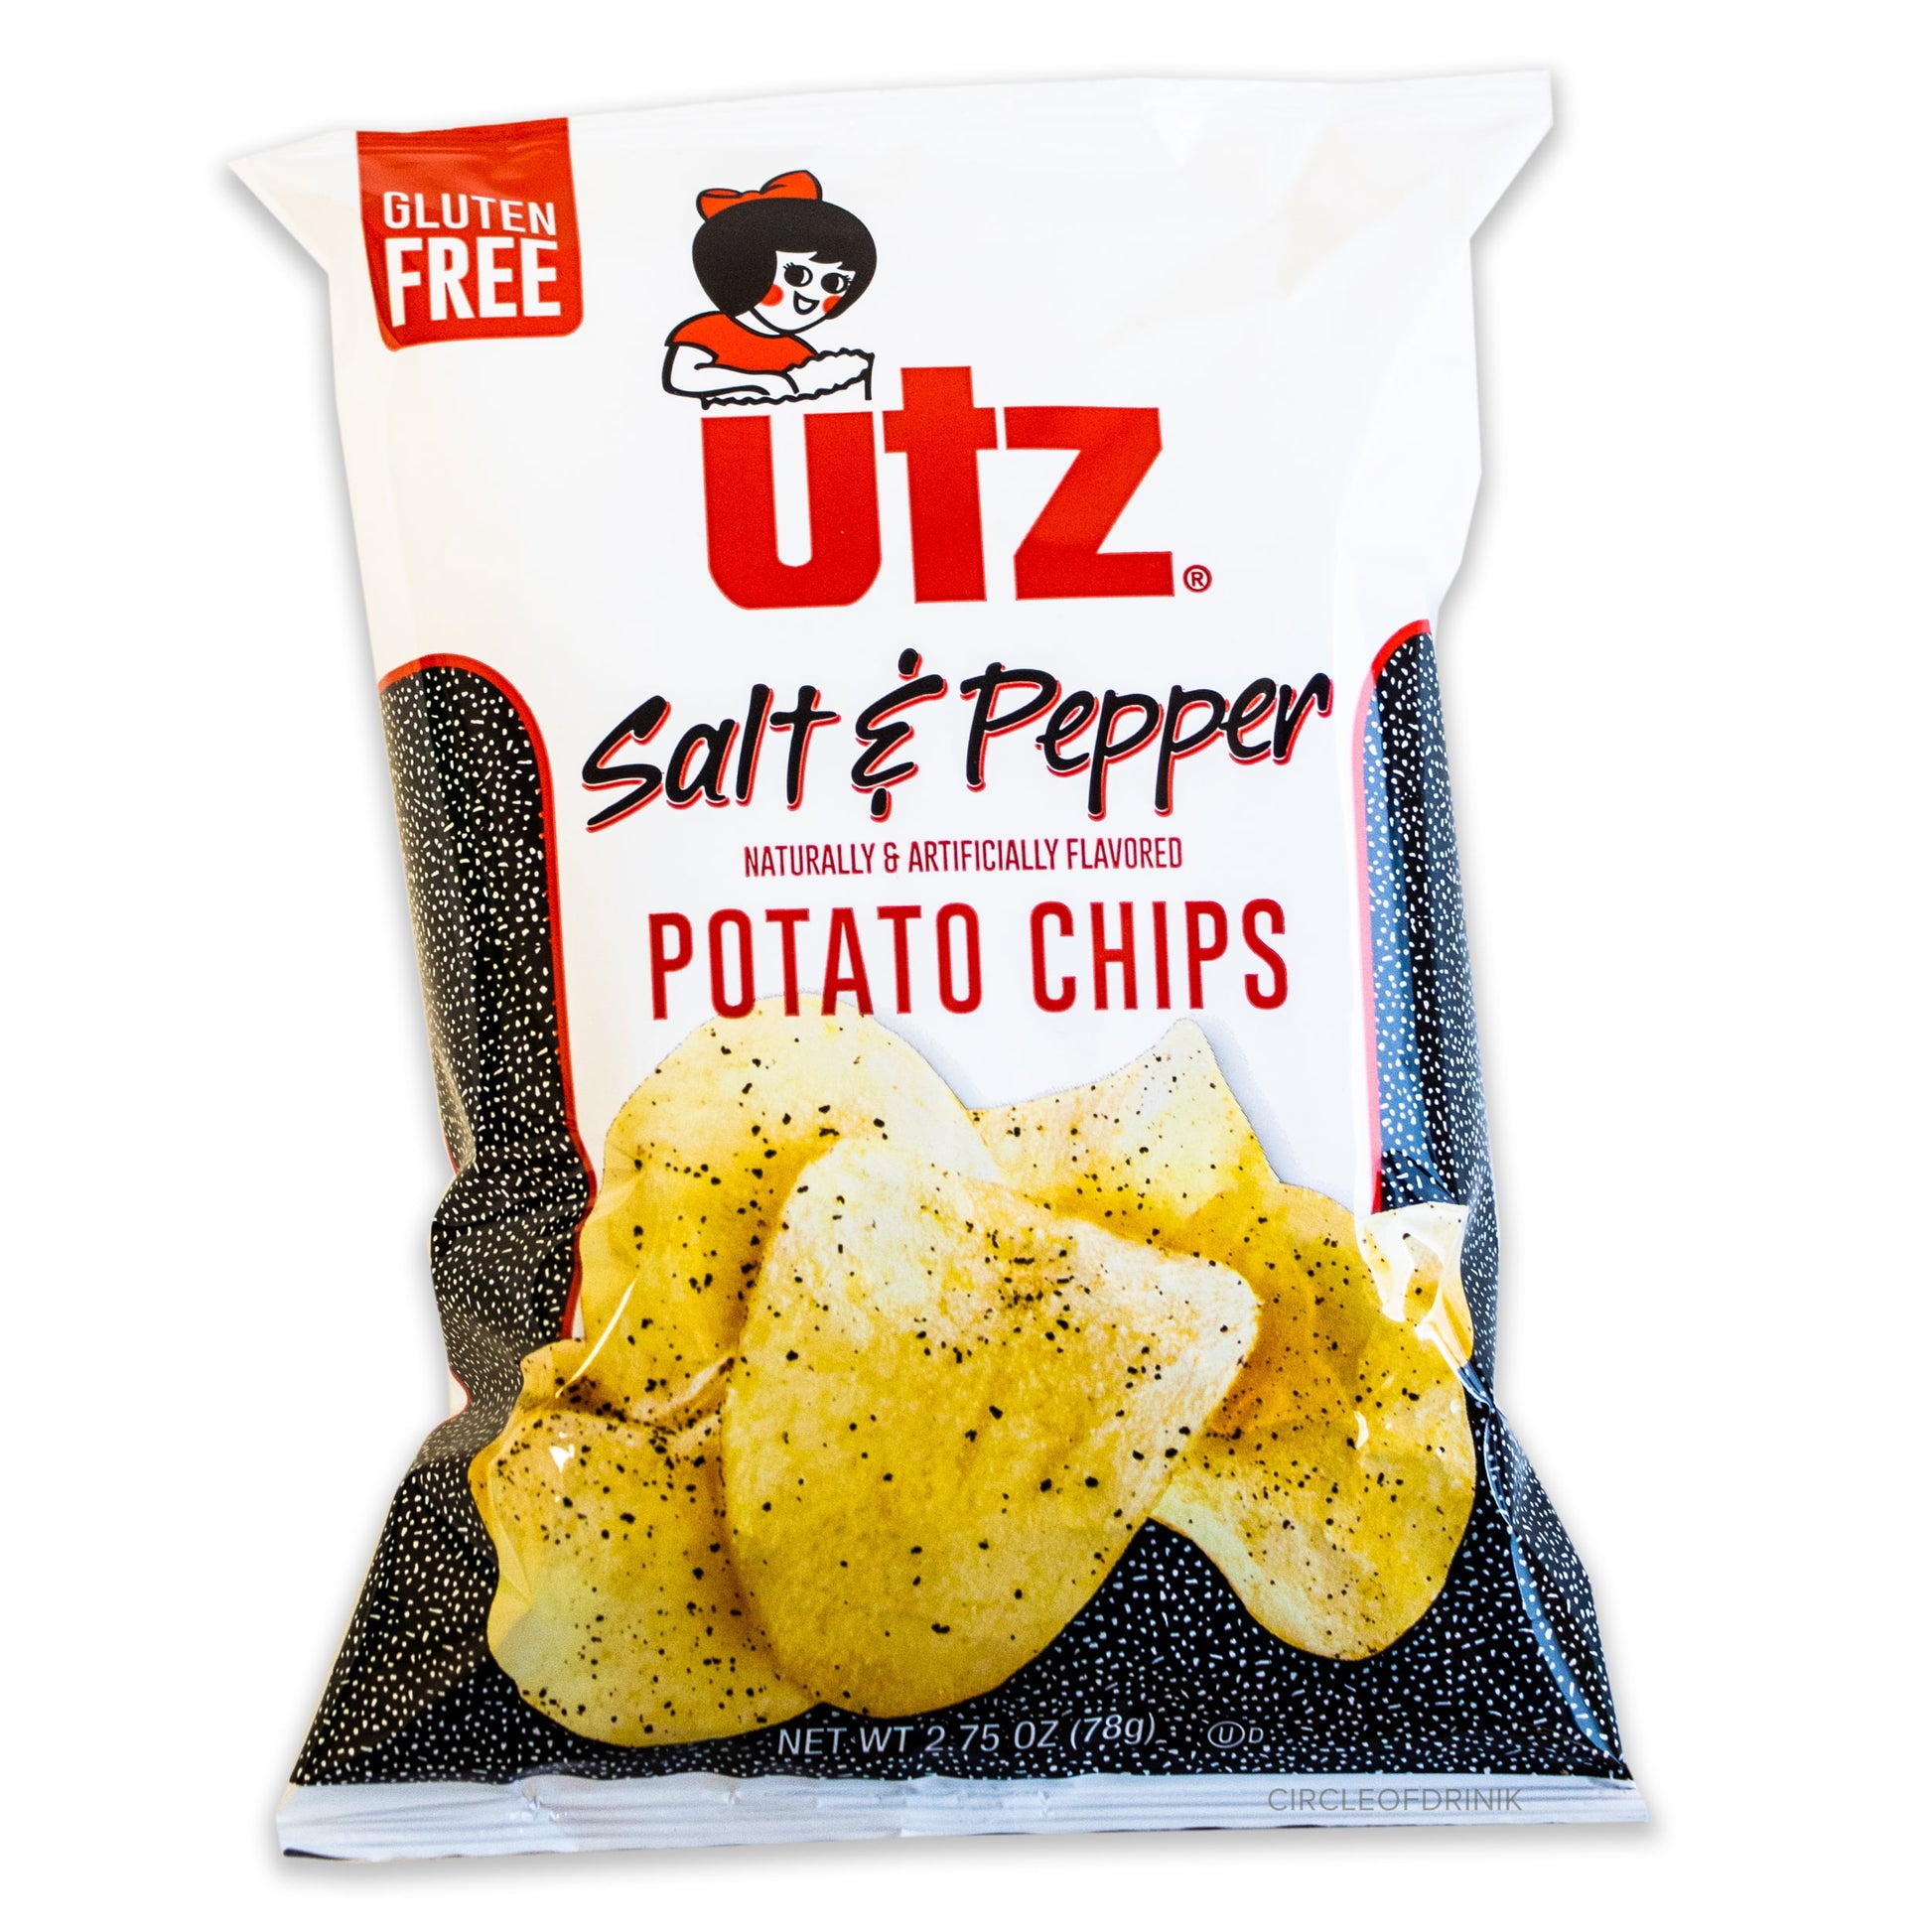 Utz Crab Potato Chip (3, 2.75Oz Bag) - Variety Pack - Utz Salt and Pepper Potato Chip (3, 2.75Oz Bags) - Delicious and Crispy - 6, 2.75Oz Bags Total